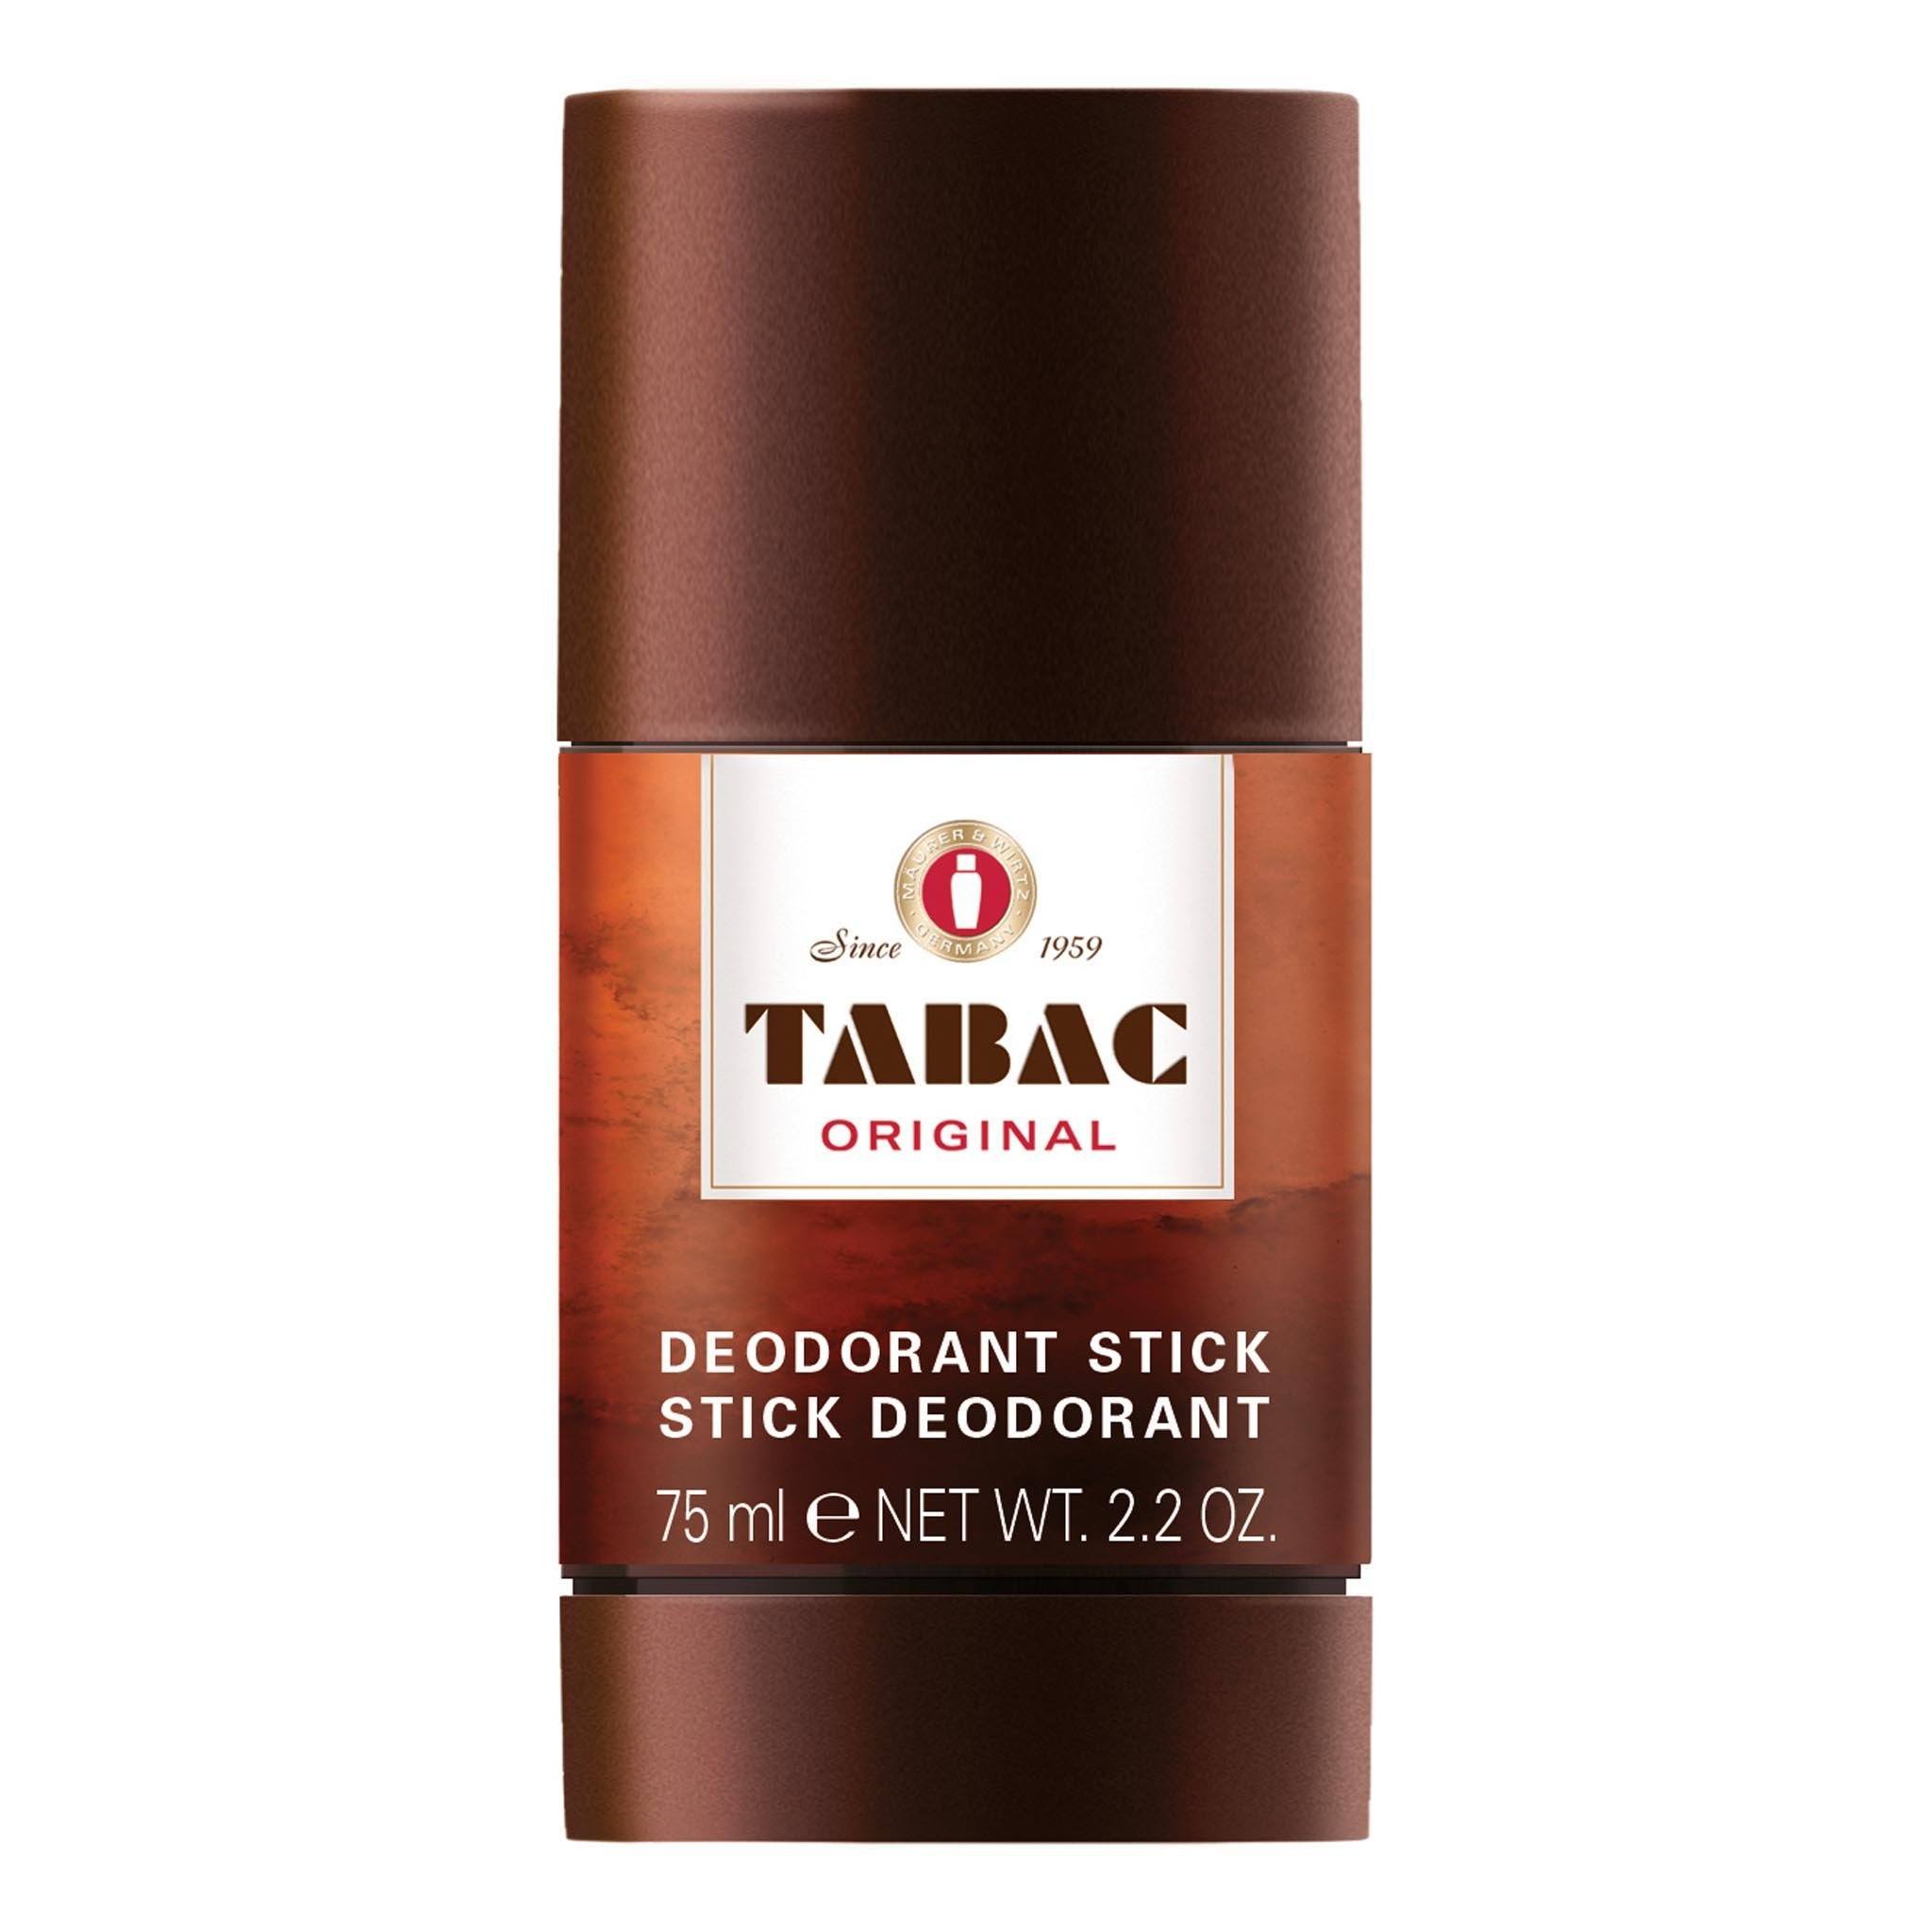 Tabac deodorant